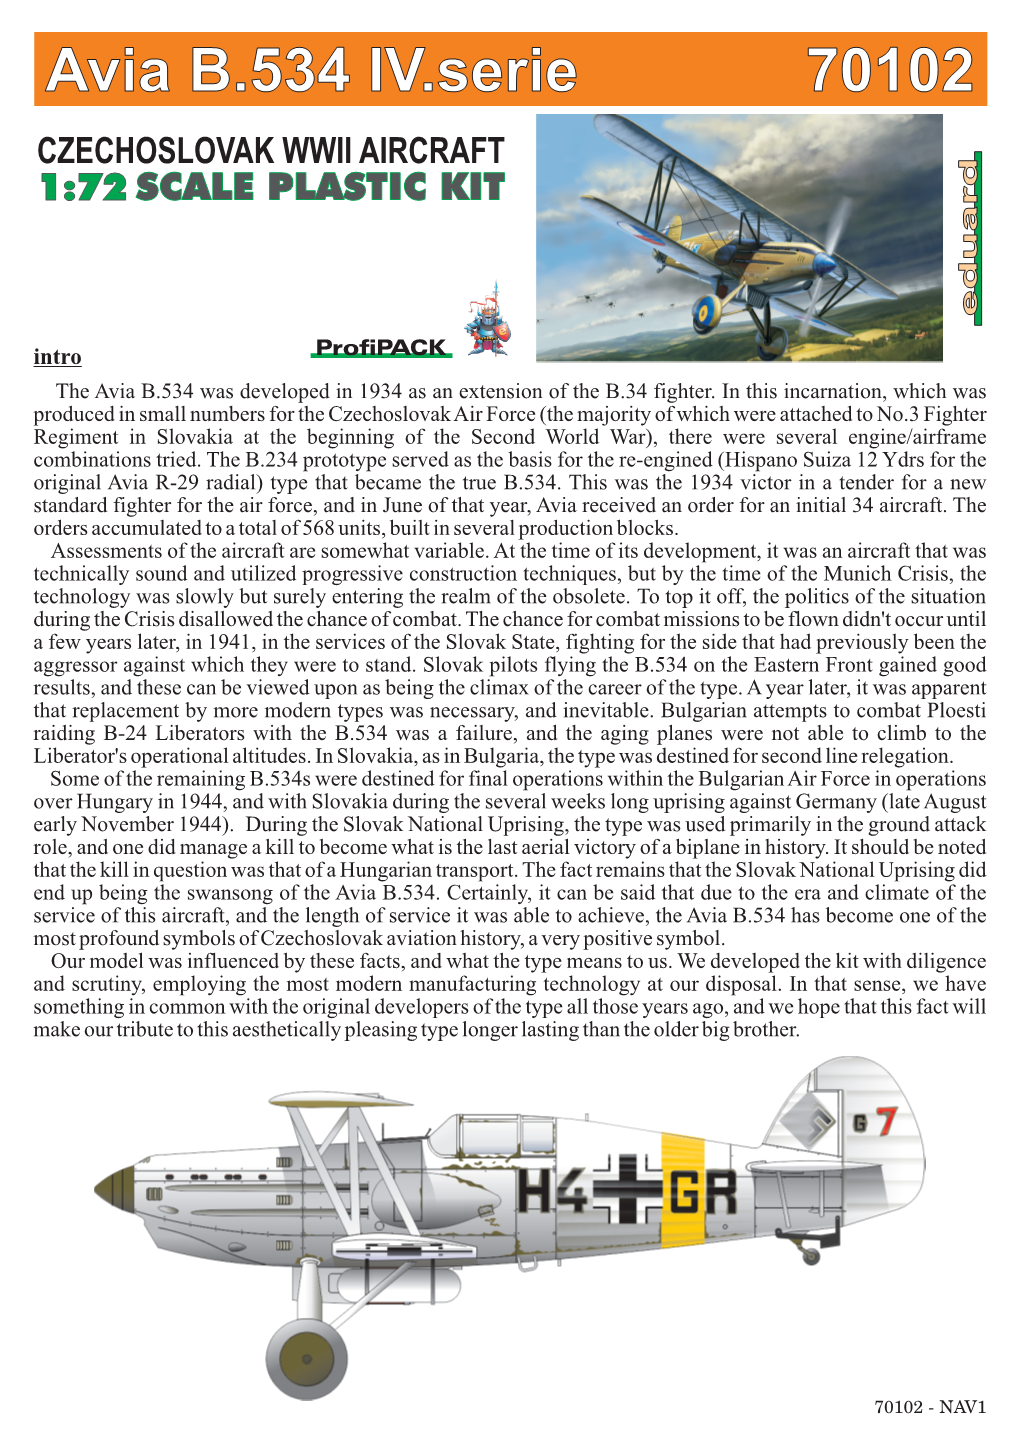 CZECHOSLOVAK WWII AIRCRAFT Avia B.534 IV.Serie 70102